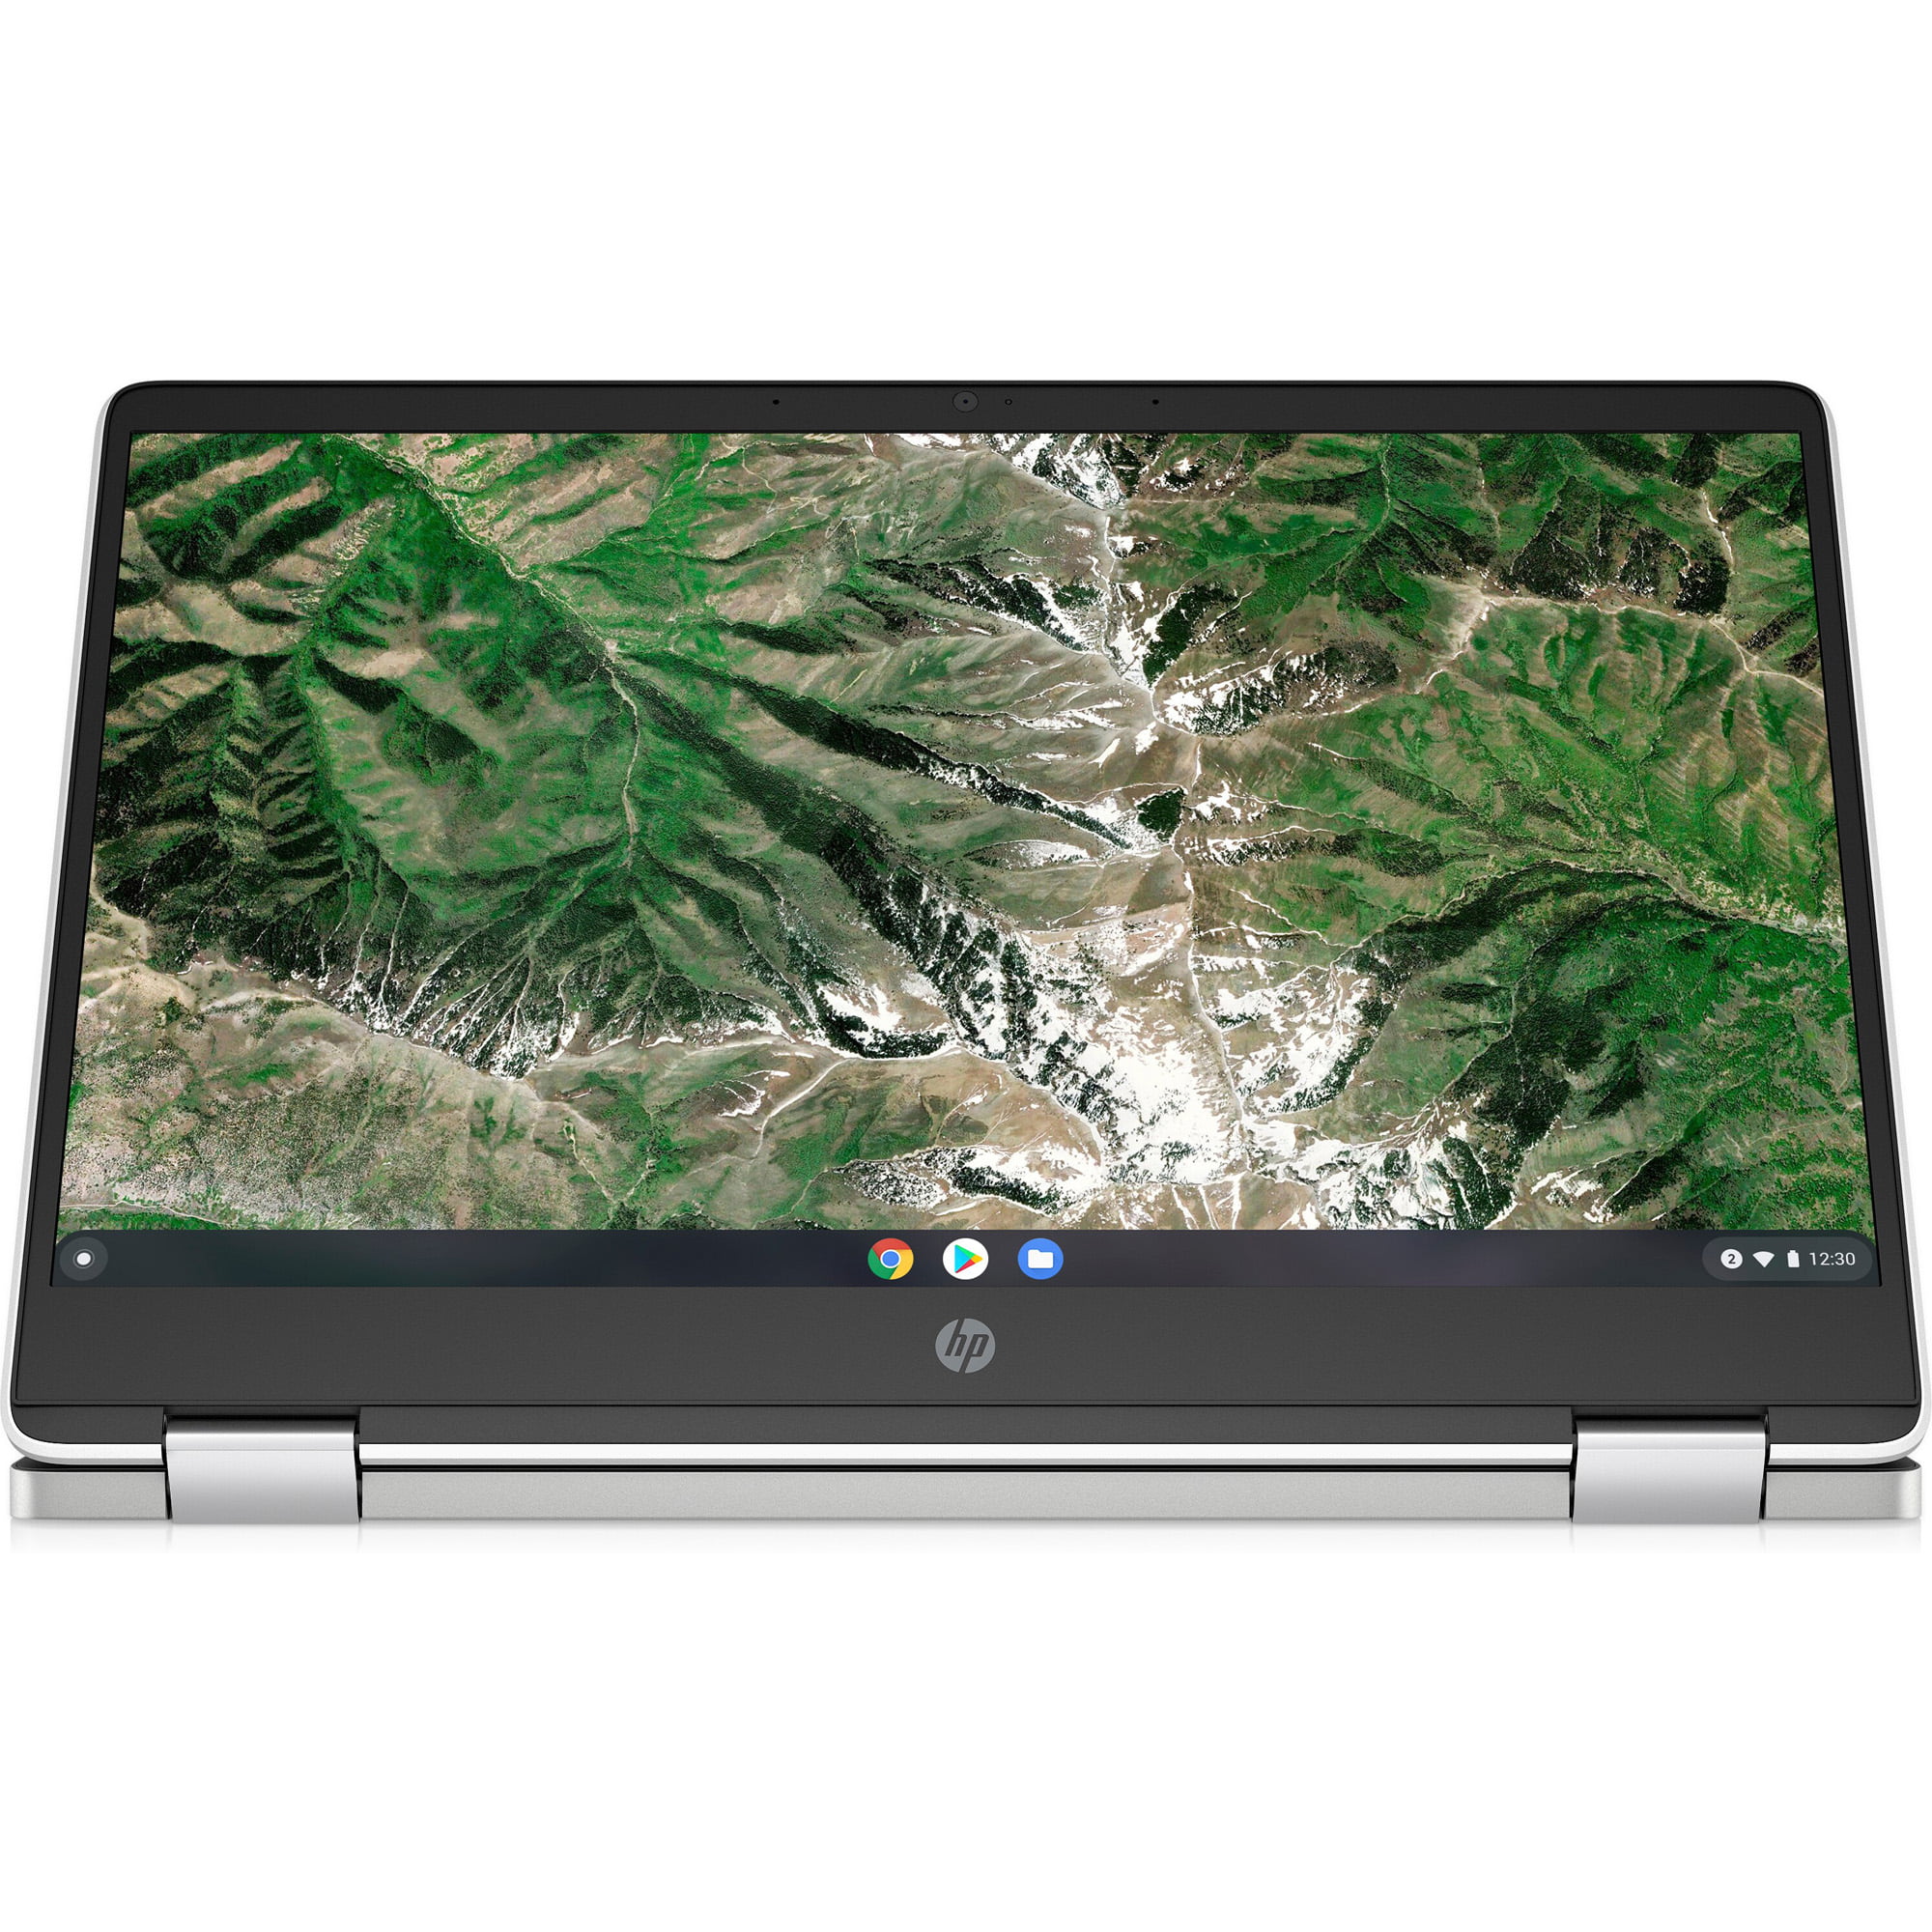 HP Chromebook x360 14a-ca0050nr 14